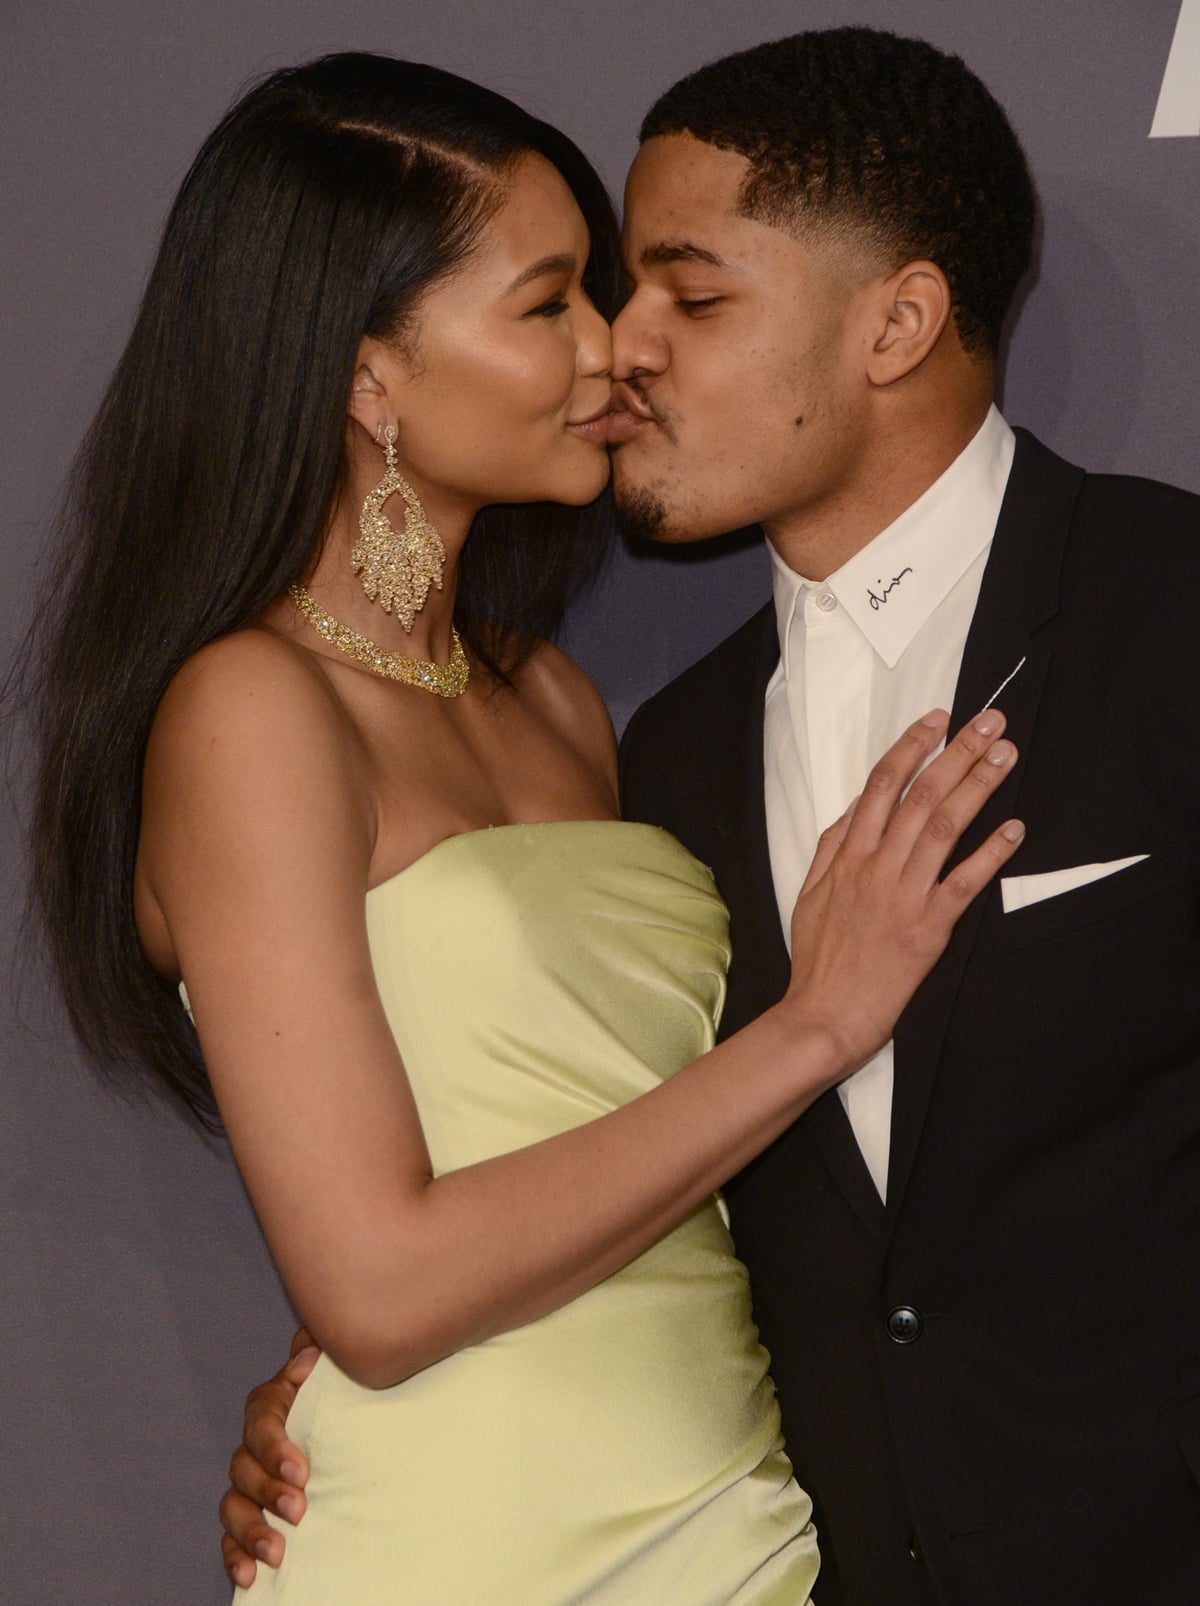 Chanel Iman kissing her husband Sterling Shepard at the amfAR New York Gala 2019